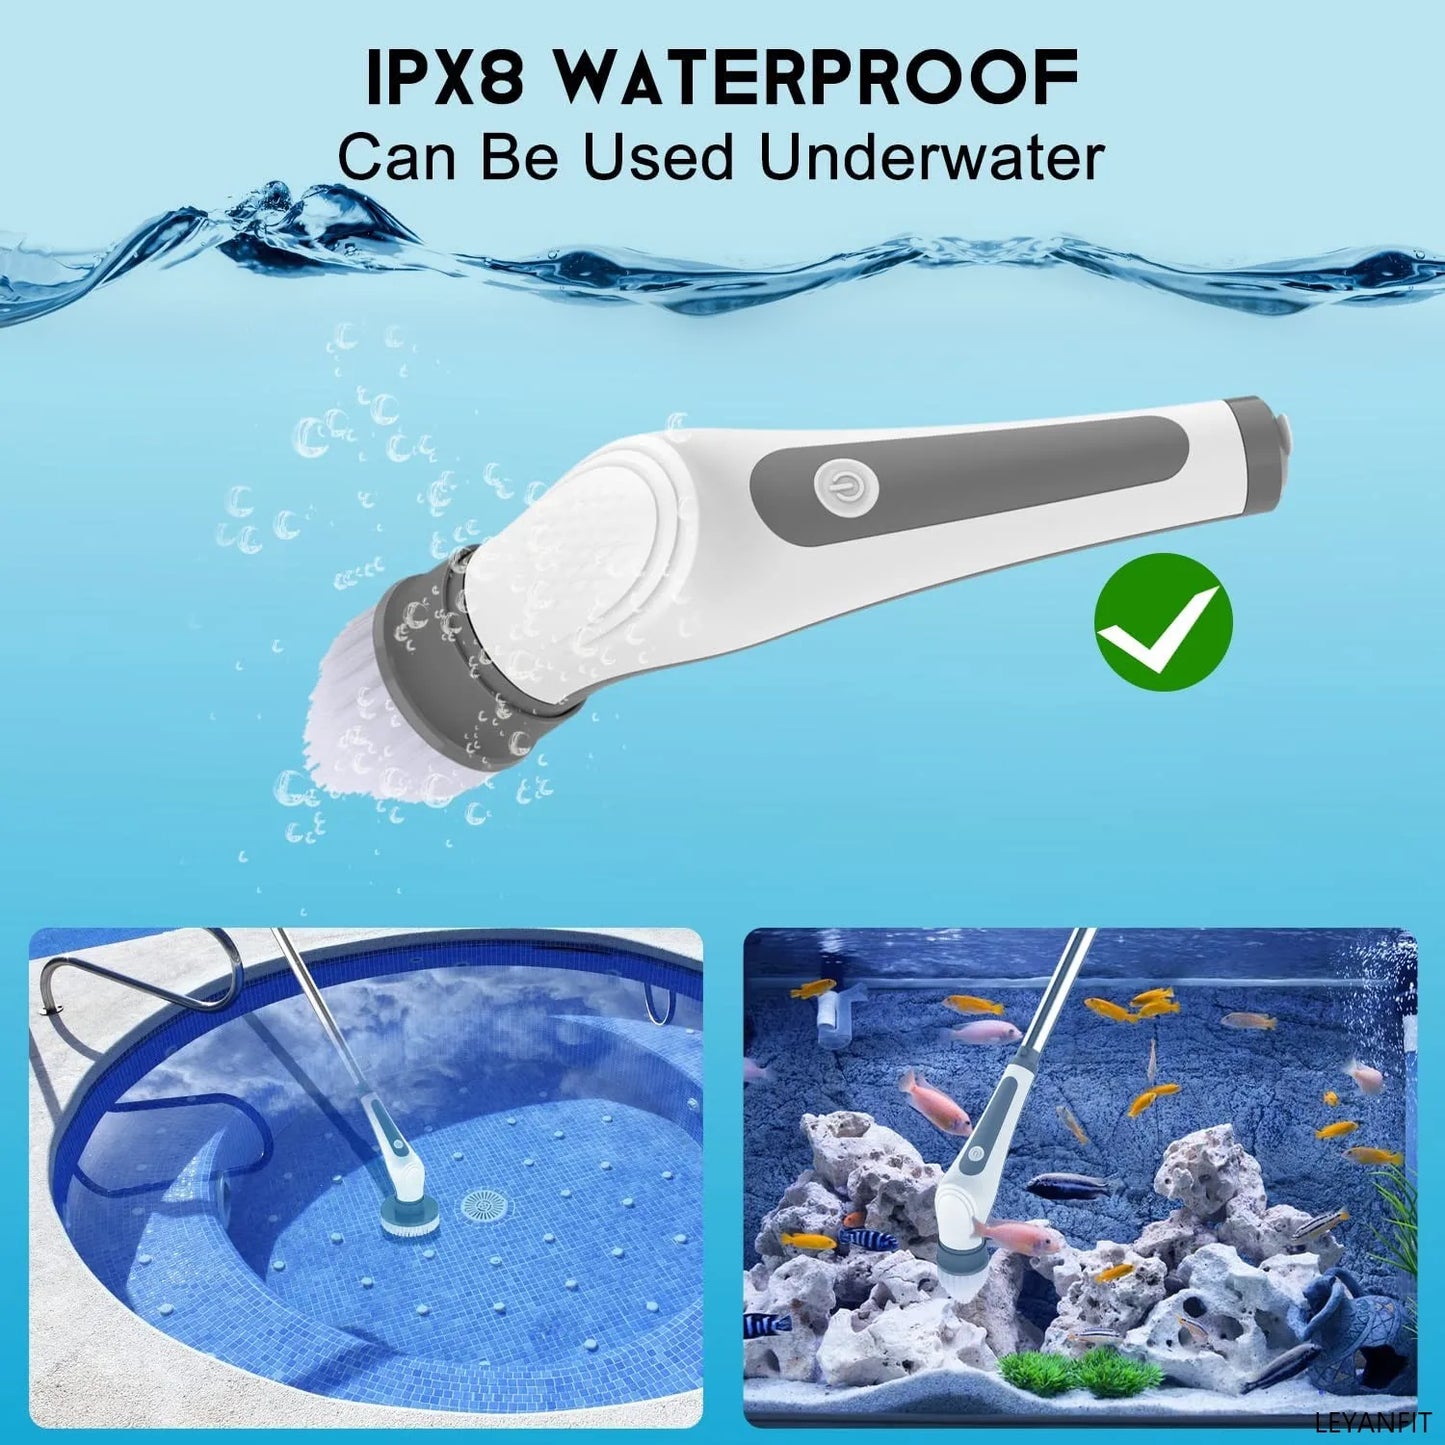 IPX8 Electric Aquarium Cleaning Brush
6 in 1 Fish Tank Scrubber Brush
Type-C Kitchen Bathroom Electric Brush